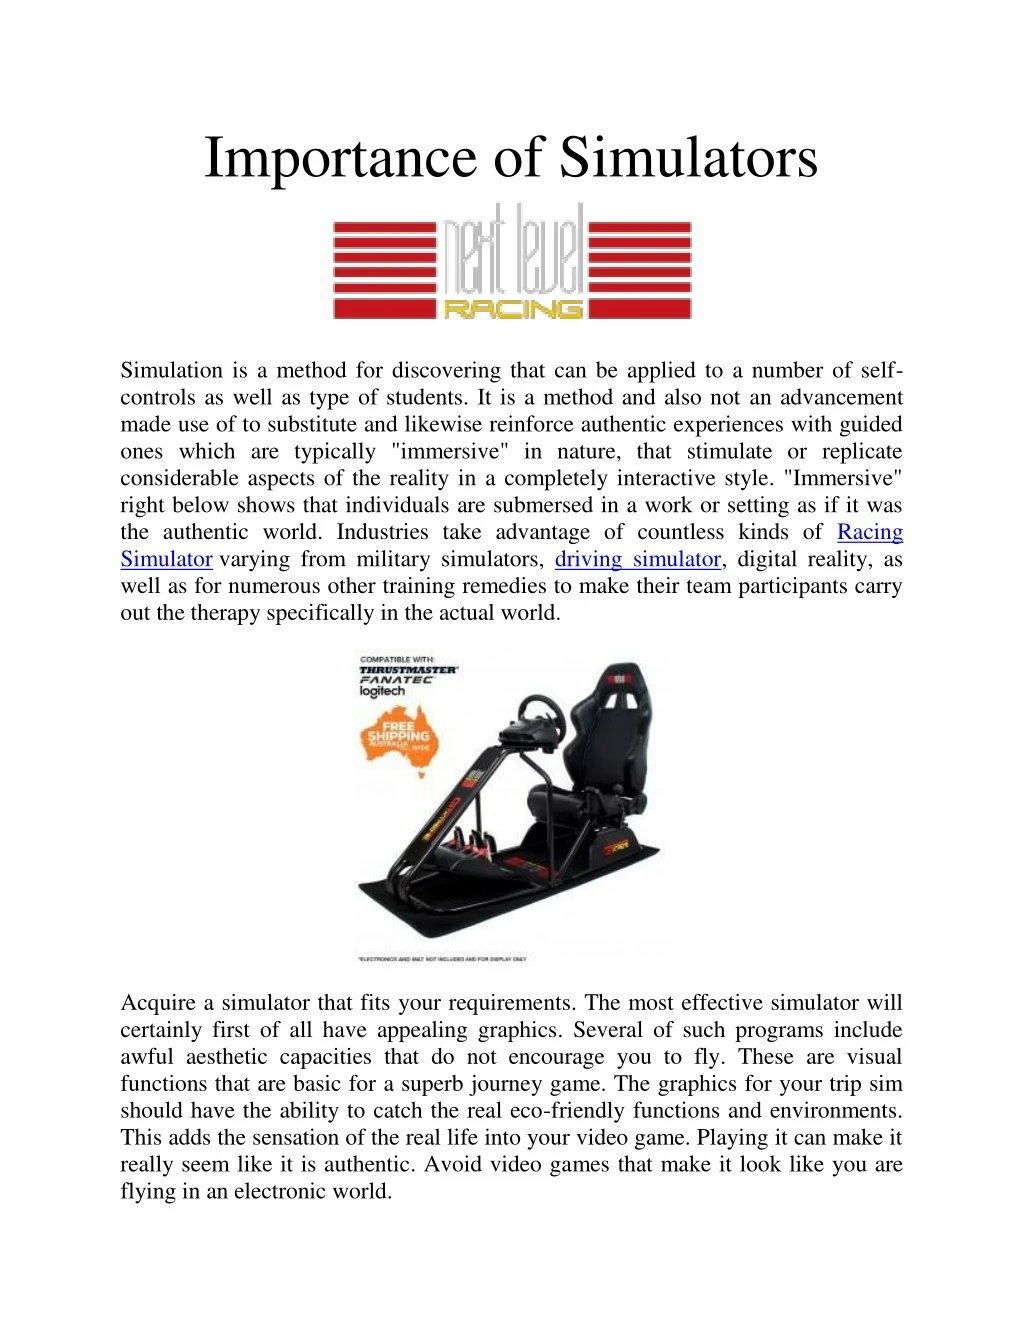 importance of simulators